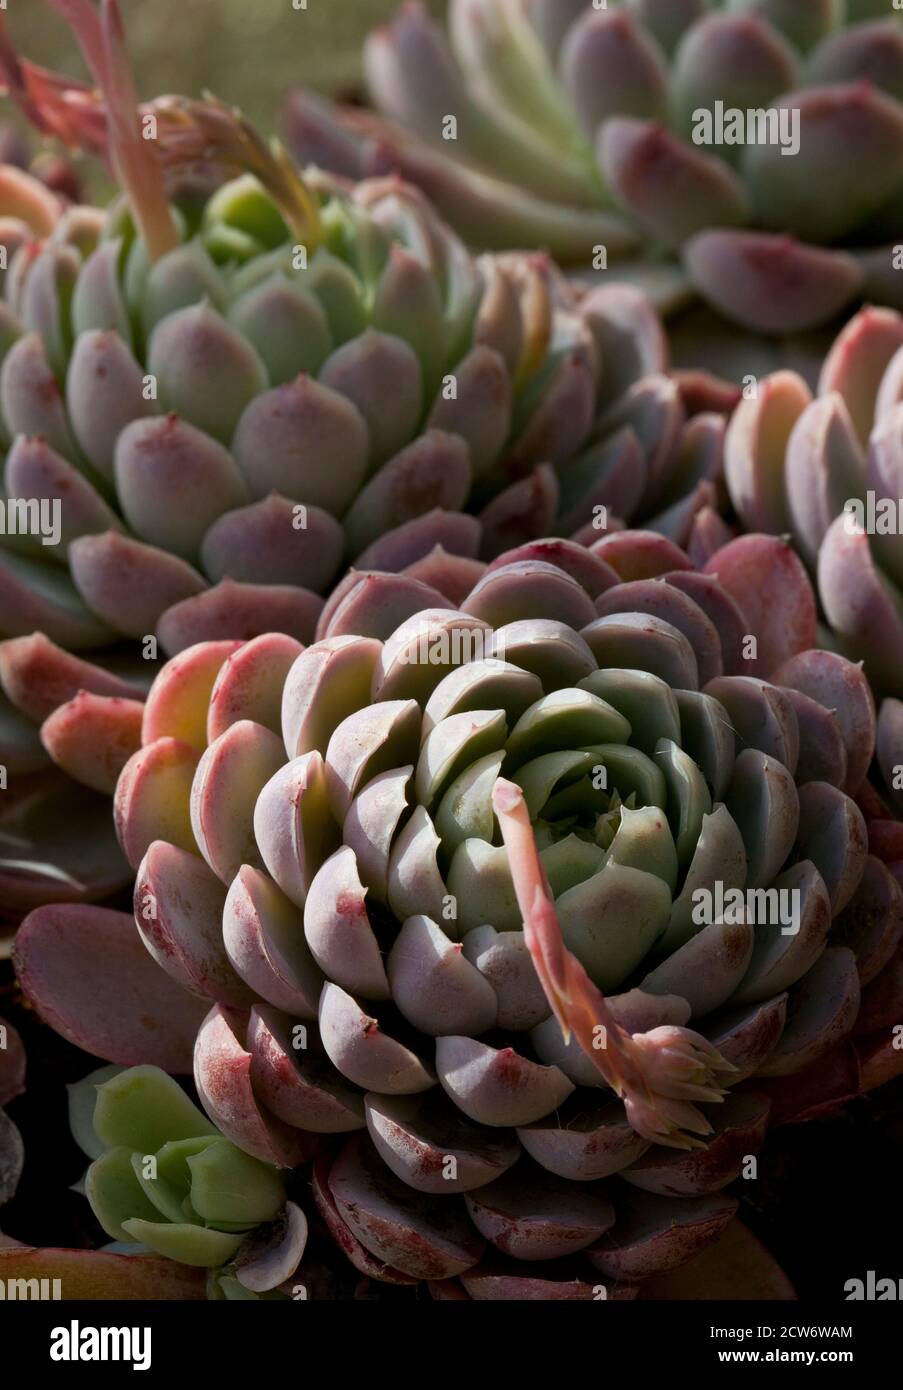 A group of Echeveria succulent plants Stock Photo